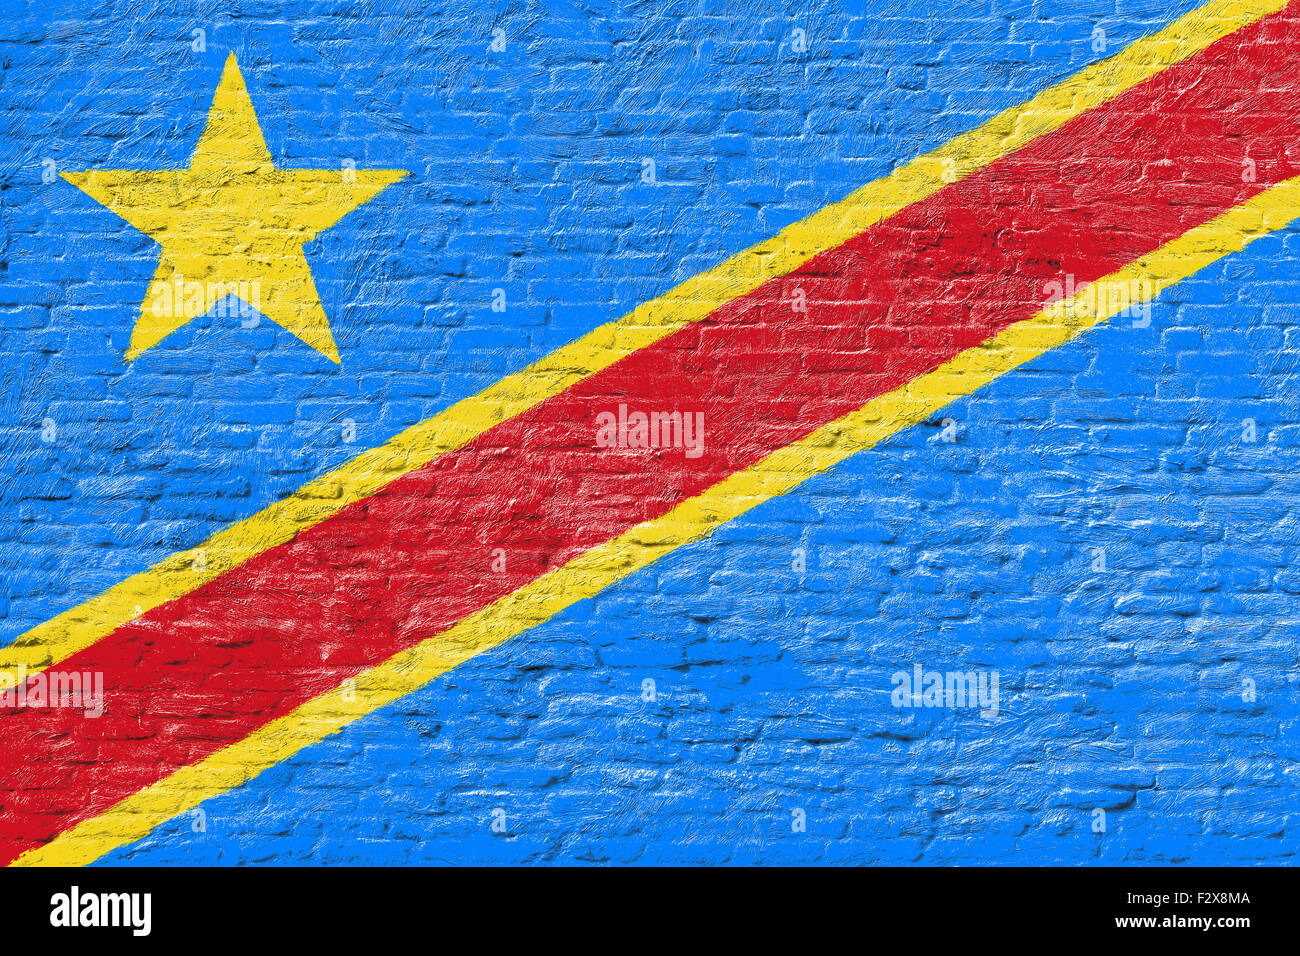 Demokratische Republik Kongo - Nationalflagge auf Ziegelmauer Stockfoto